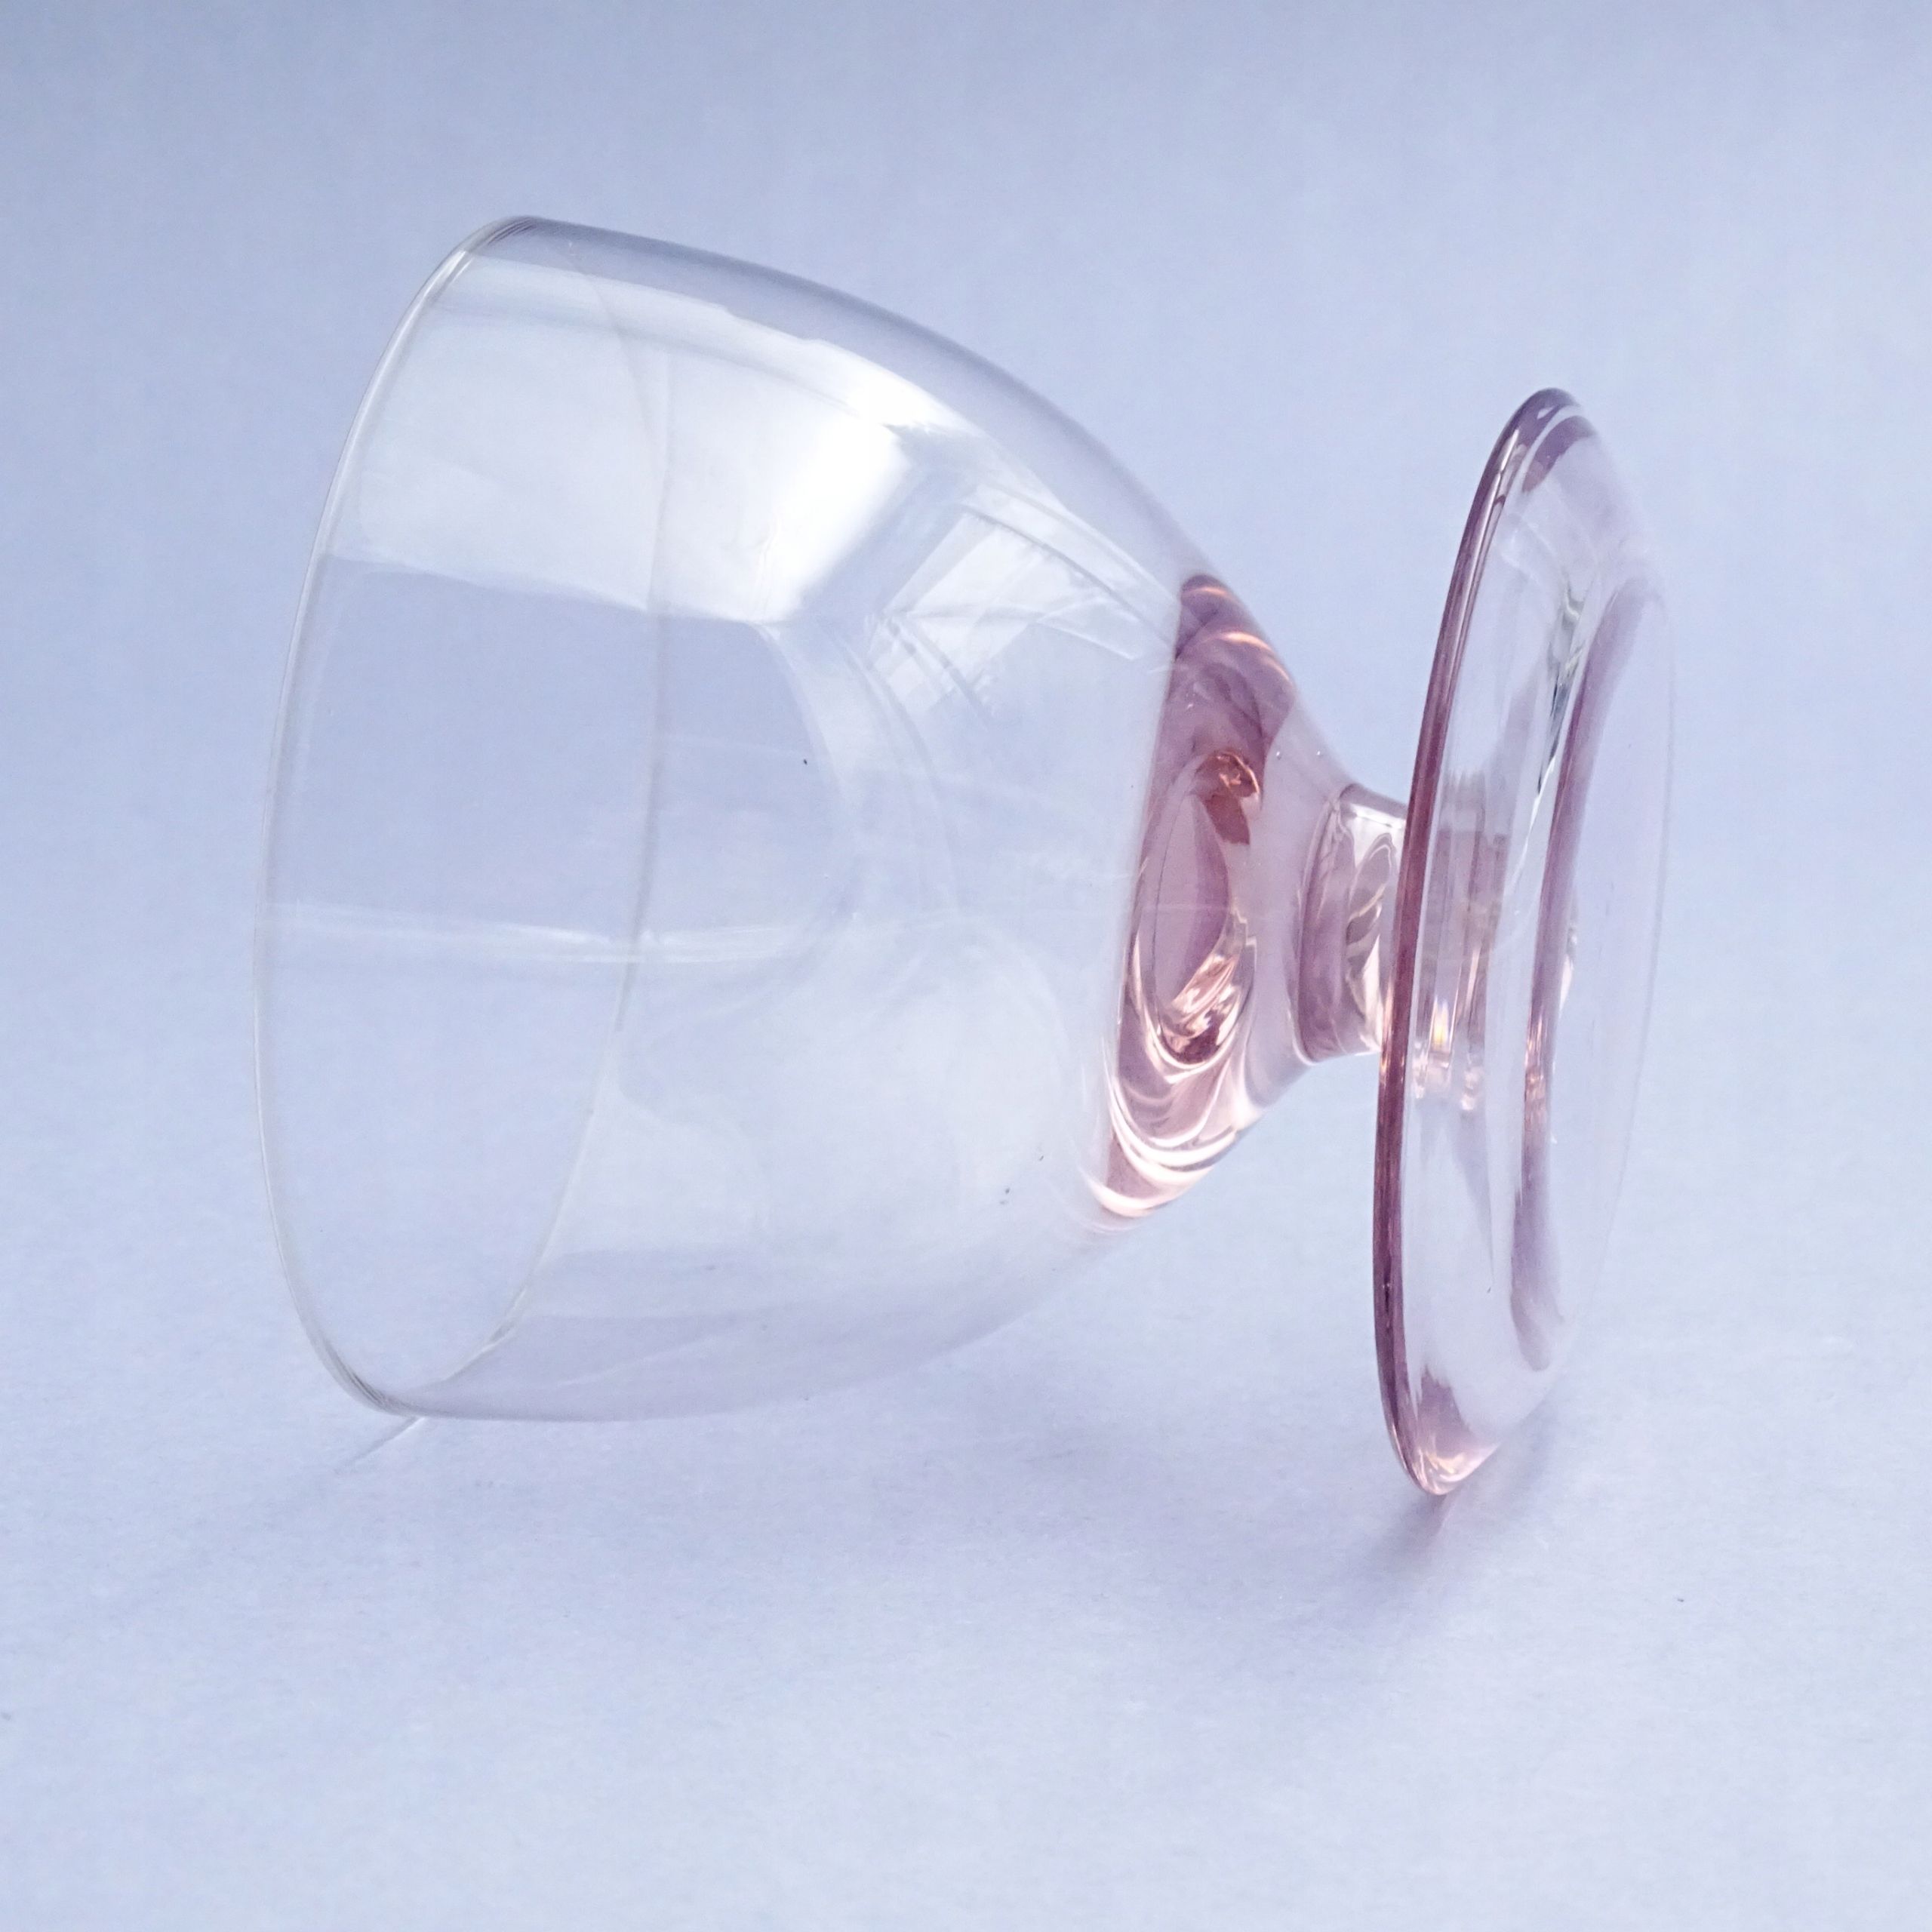 lata 60-te piękny szklany pucharek na cytrusy